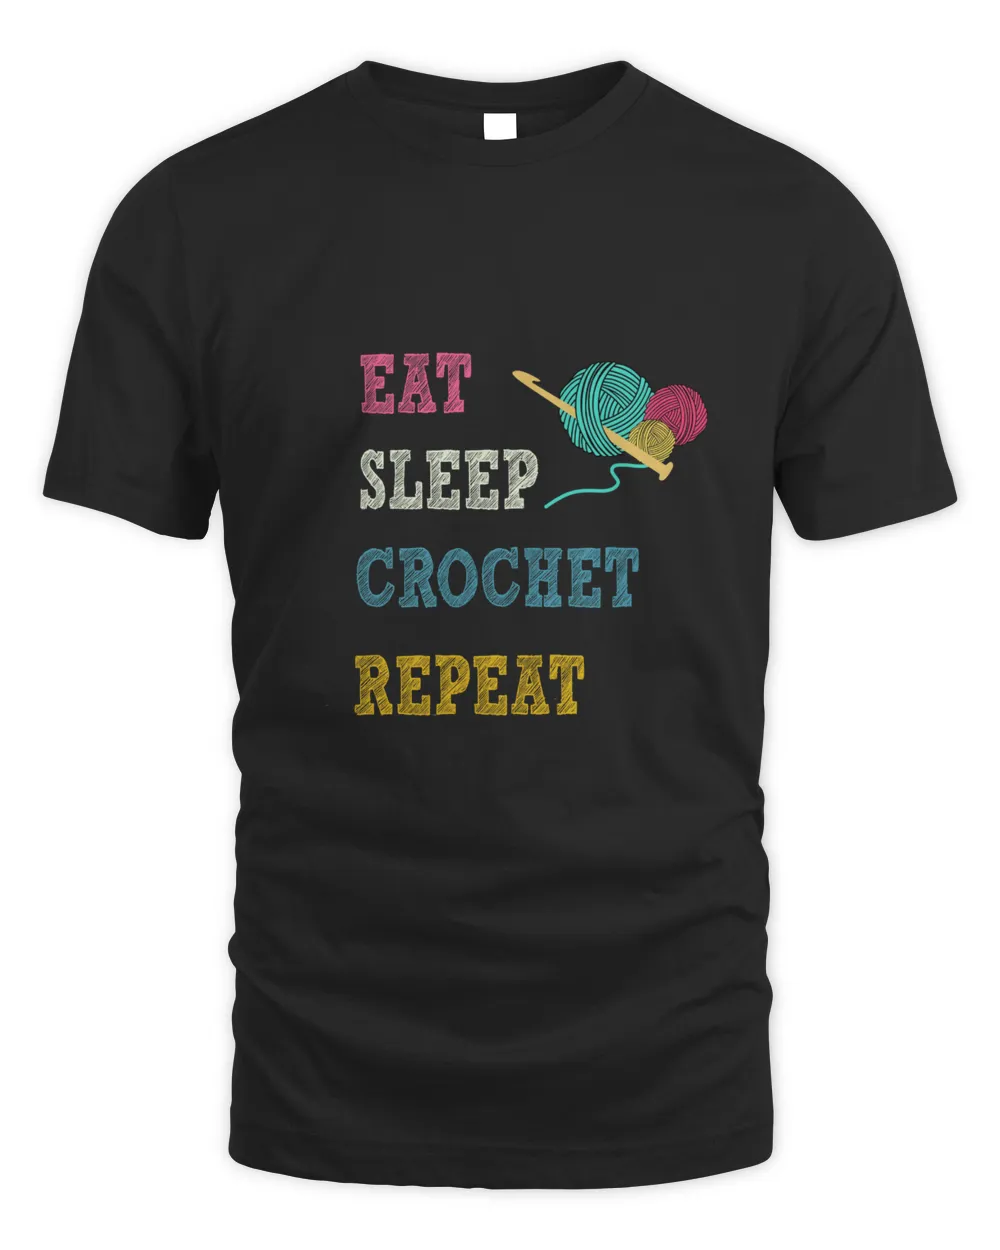 Eat sleep crochet repeat